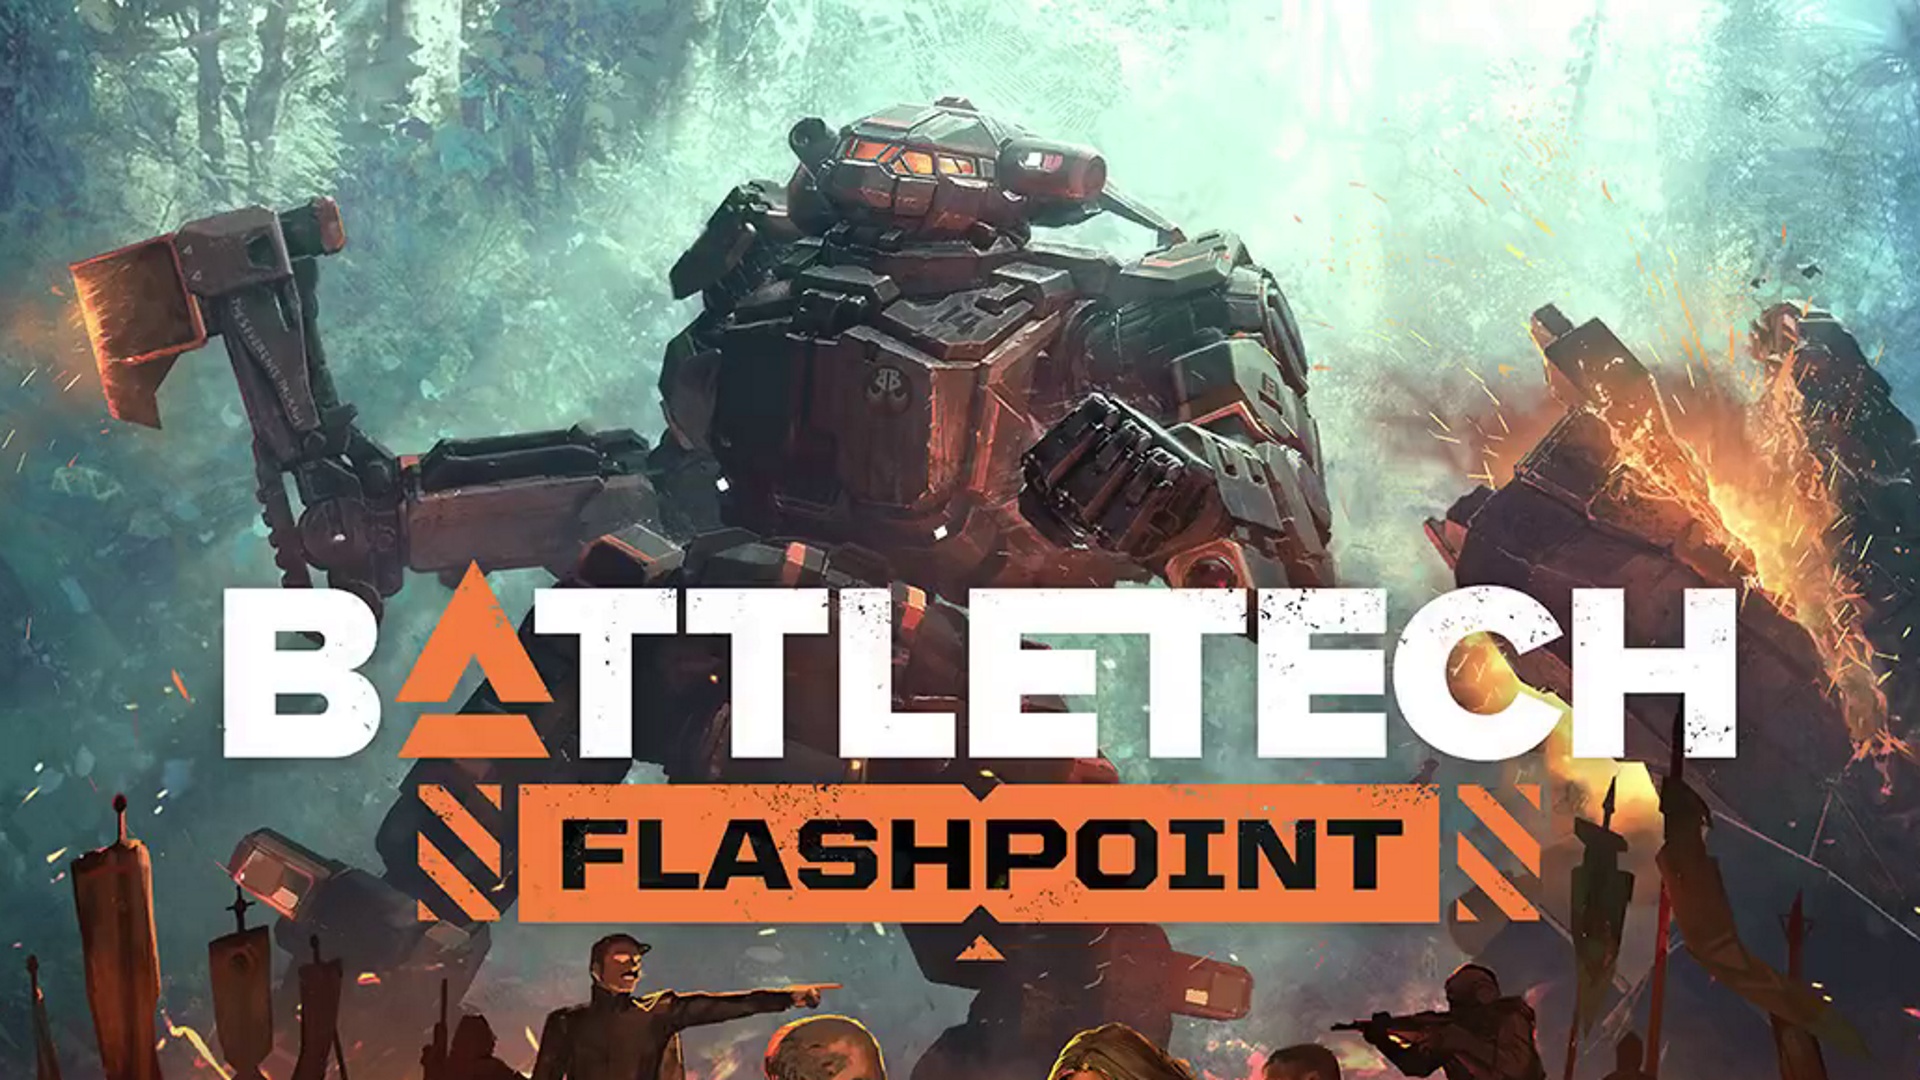 Battletech Flashpoint Brings More RoboPain Your WayVideo